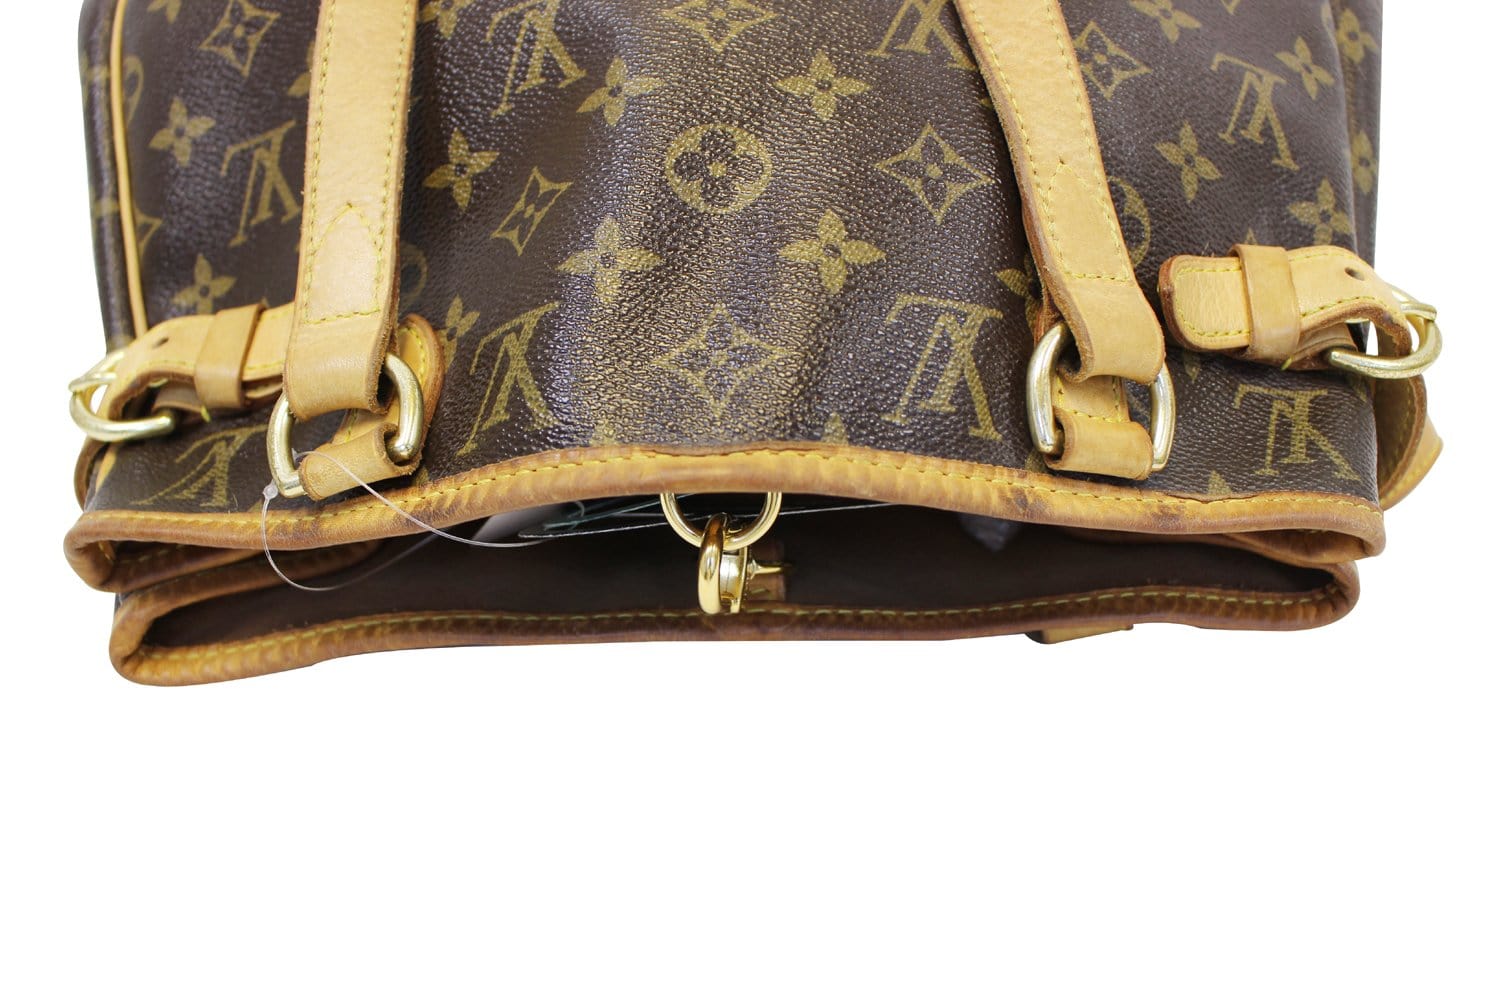 Cheap Hotelomega Jordan outlet, Louis Vuitton pre-owned Batignolles  shoulder bag Brown